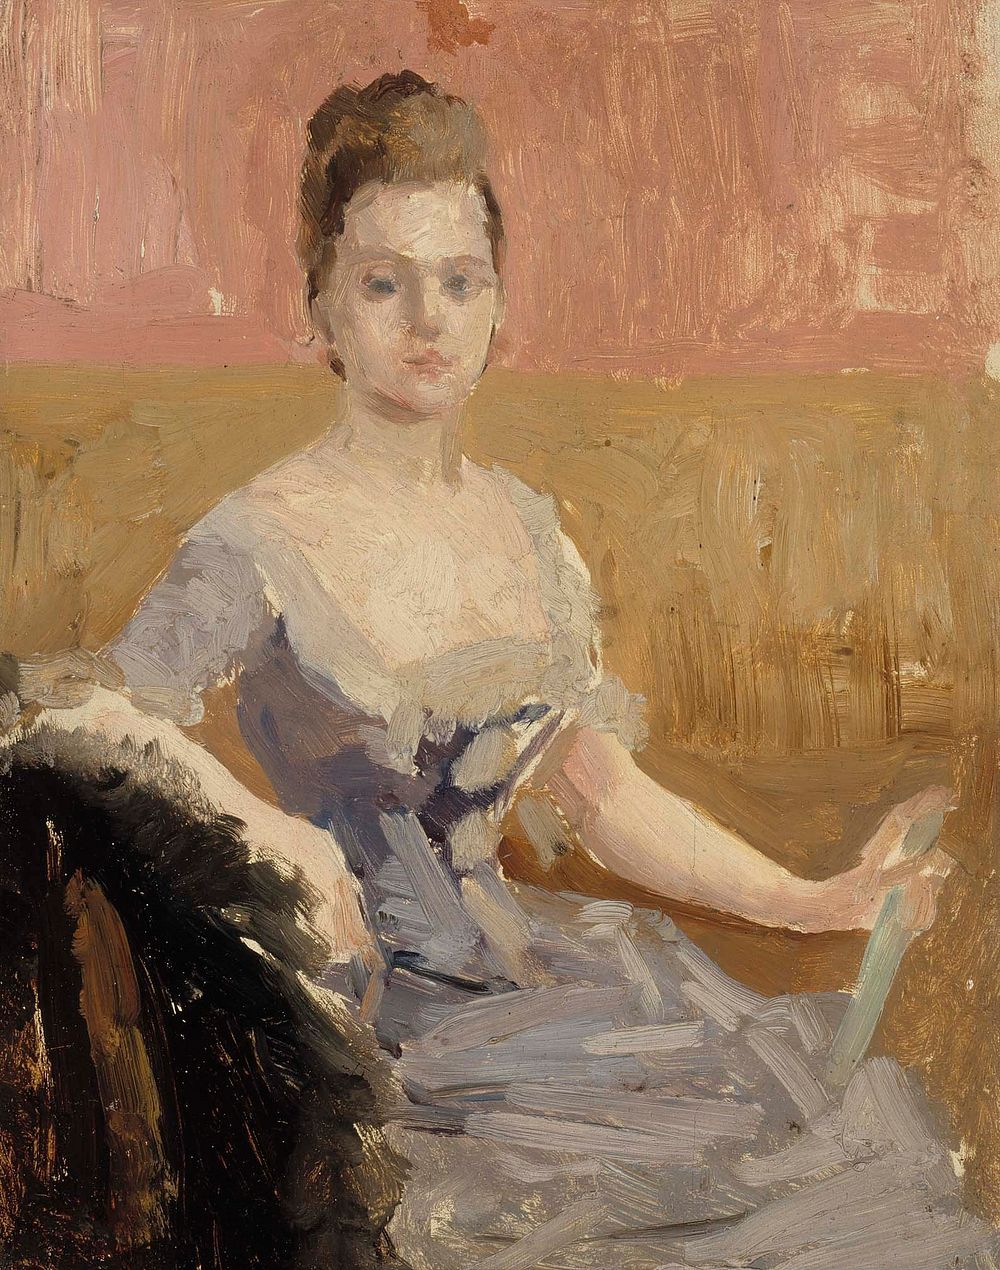 Portrait study of countess augusta lewenhaupt, 1887, by Albert Edelfelt